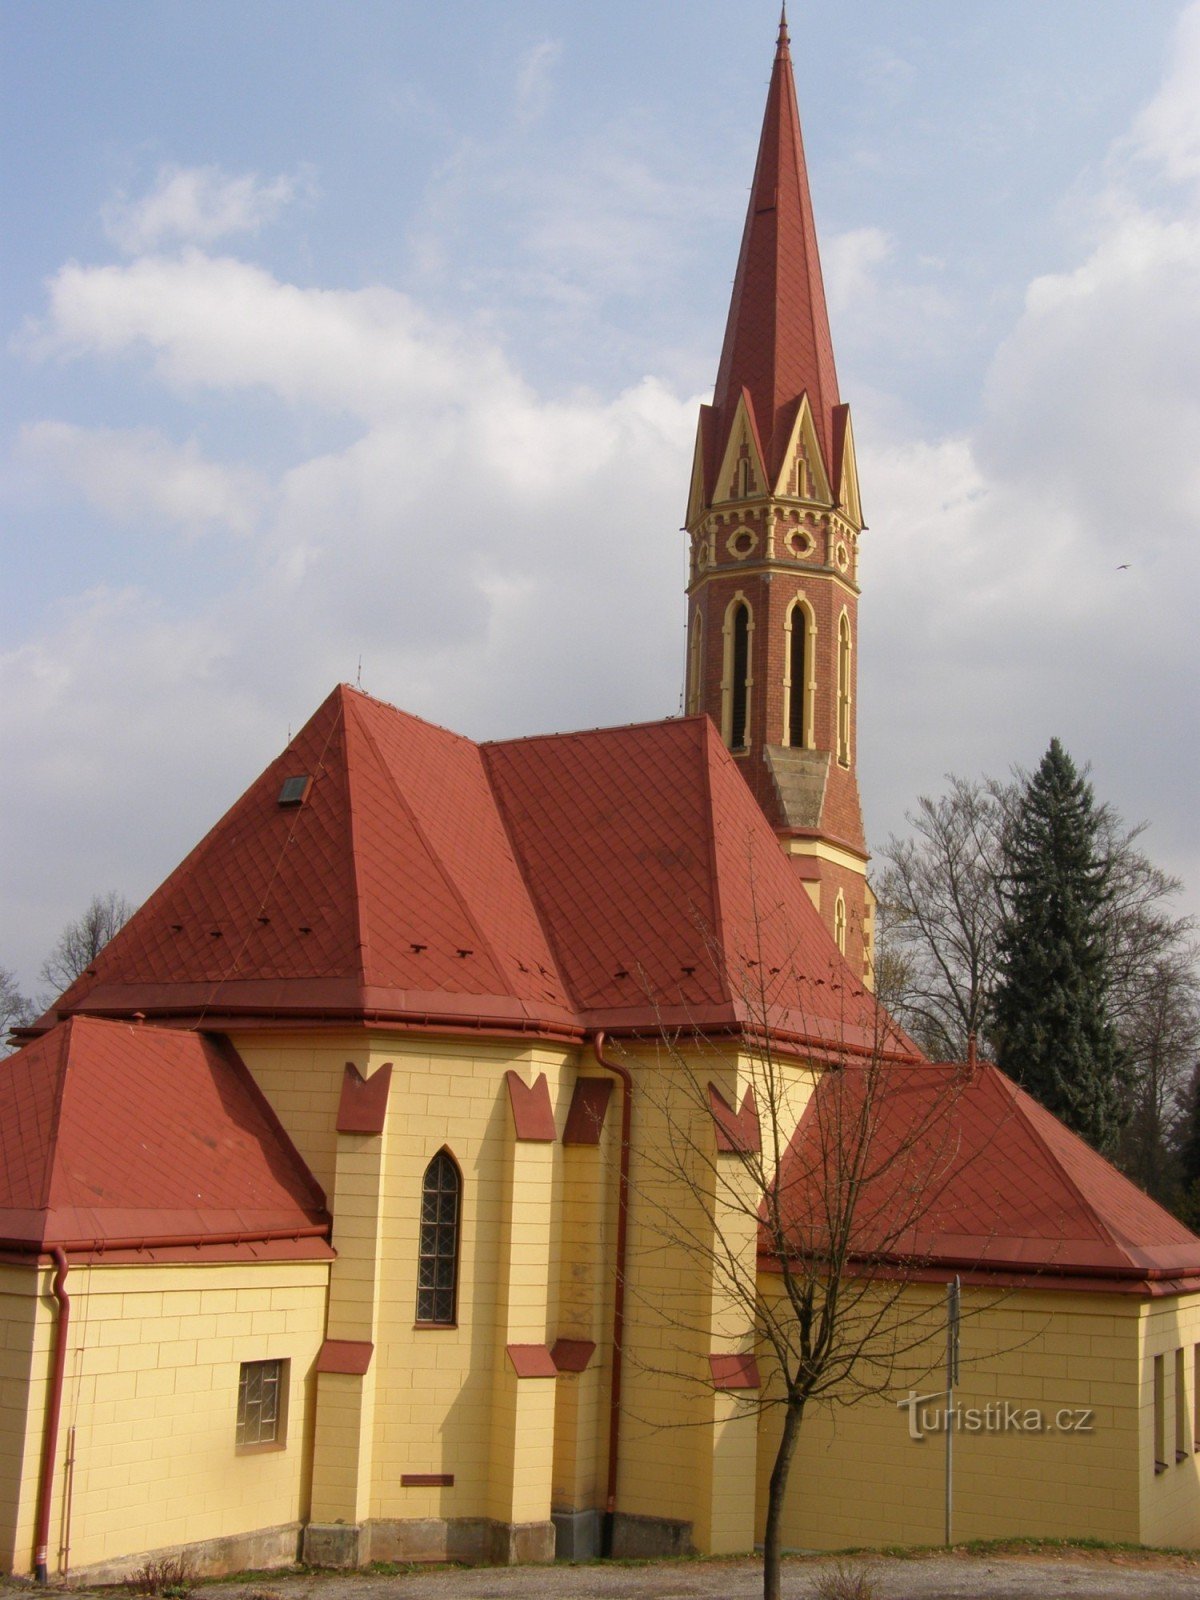 Trutnov - ευαγγελική εκκλησία, αίθουσα του Bohuslav Martinů